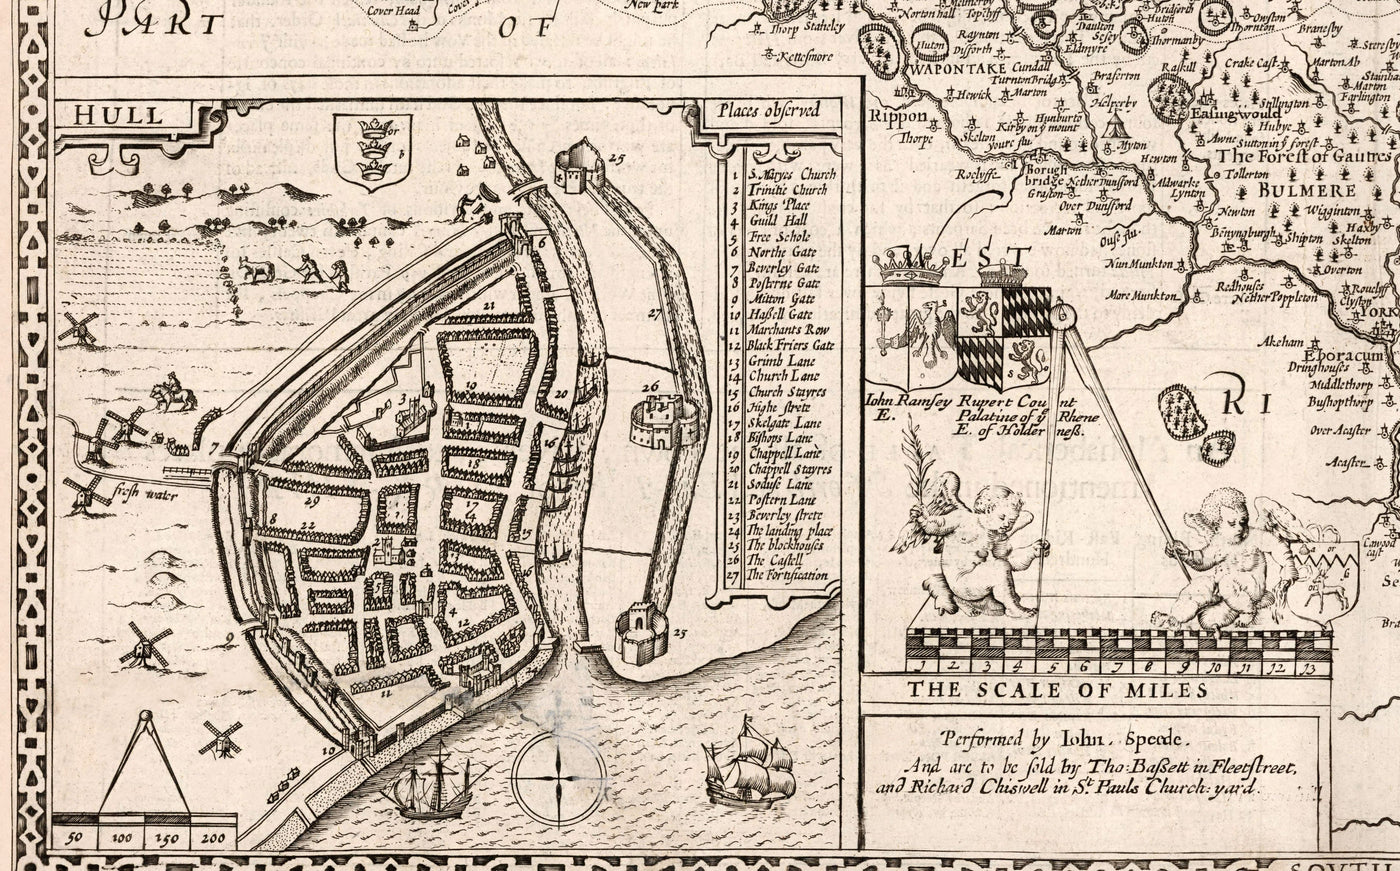 Ancienne carte Nord et East Yorkshire, 1611 par John Speed ​​- Hull, York, Middlesbrough, Harrogate